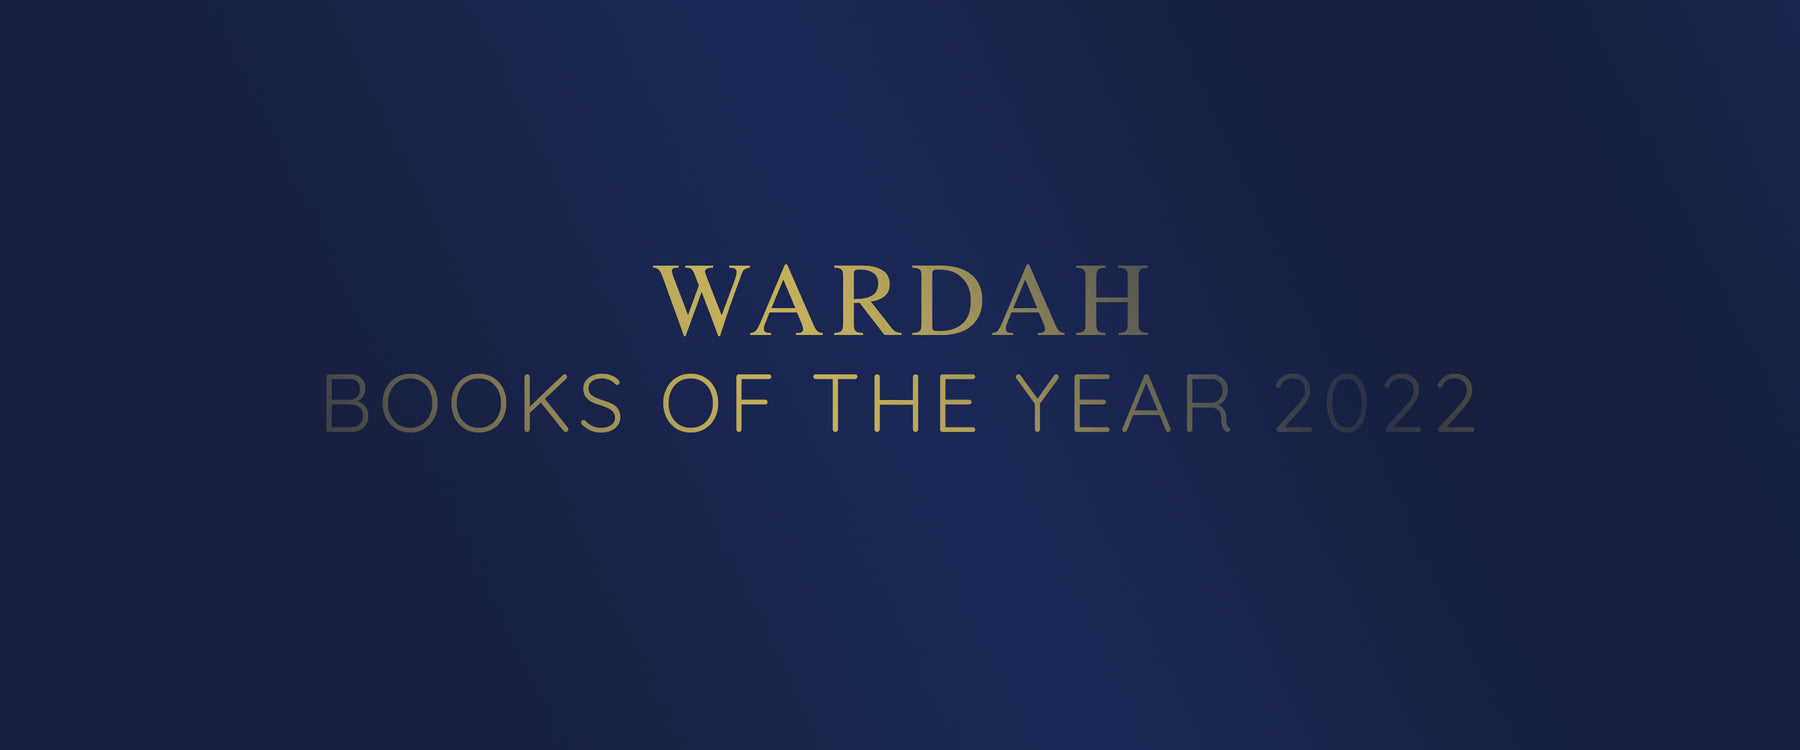 Wardah Books of the Year 2022